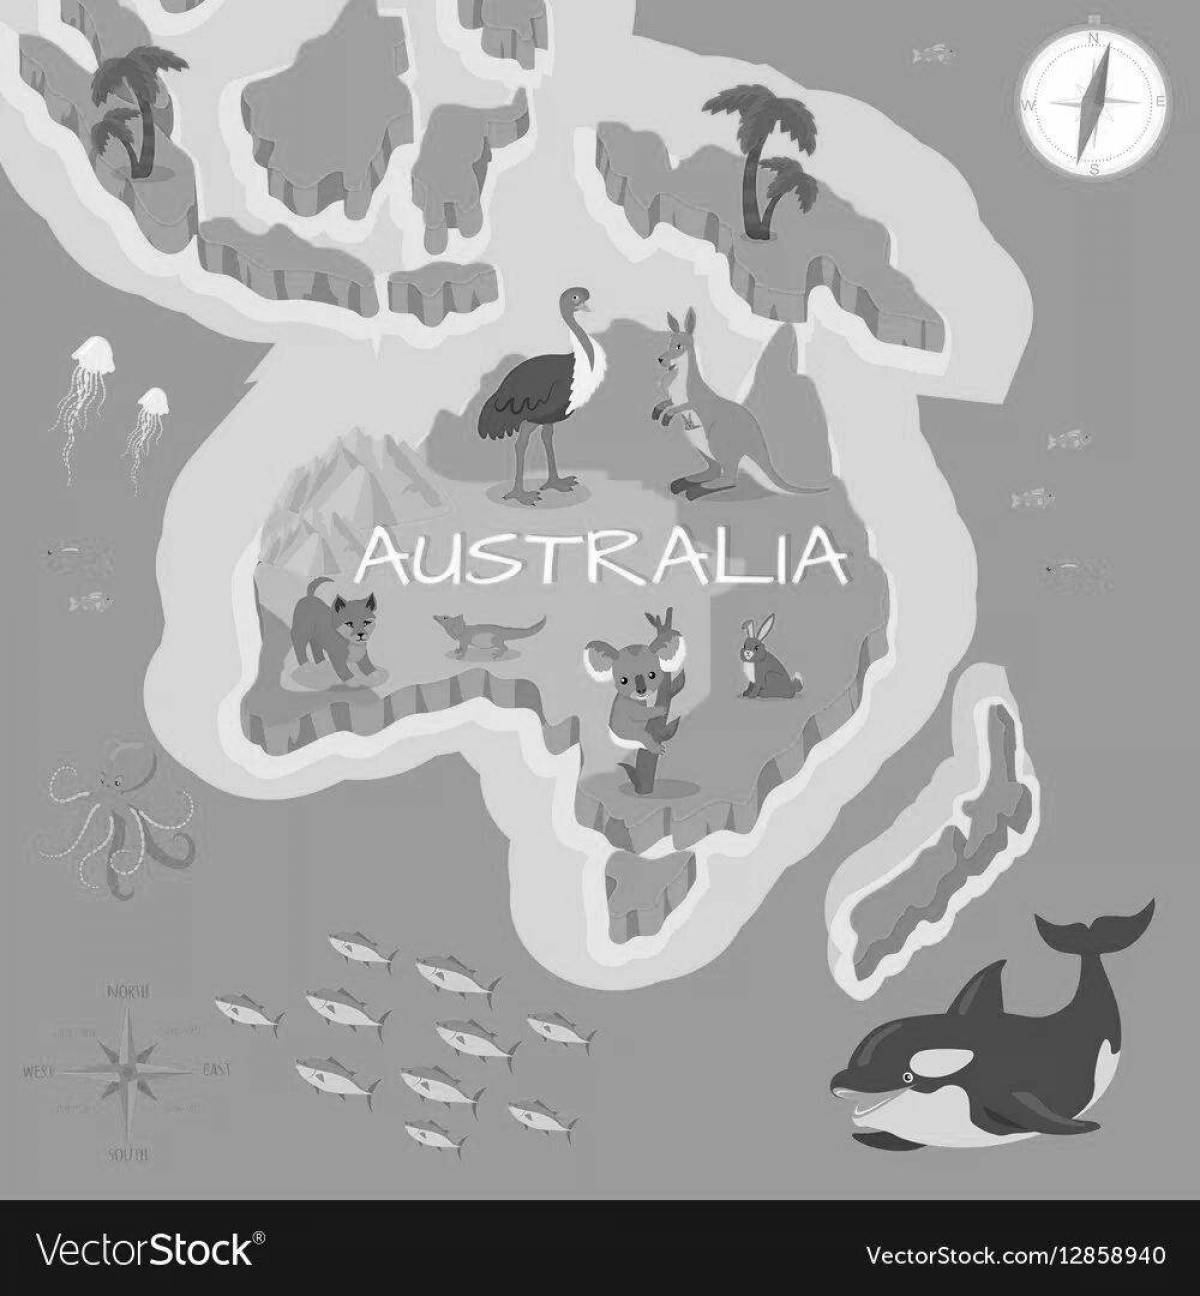 Раскраска сказочная материковая австралия